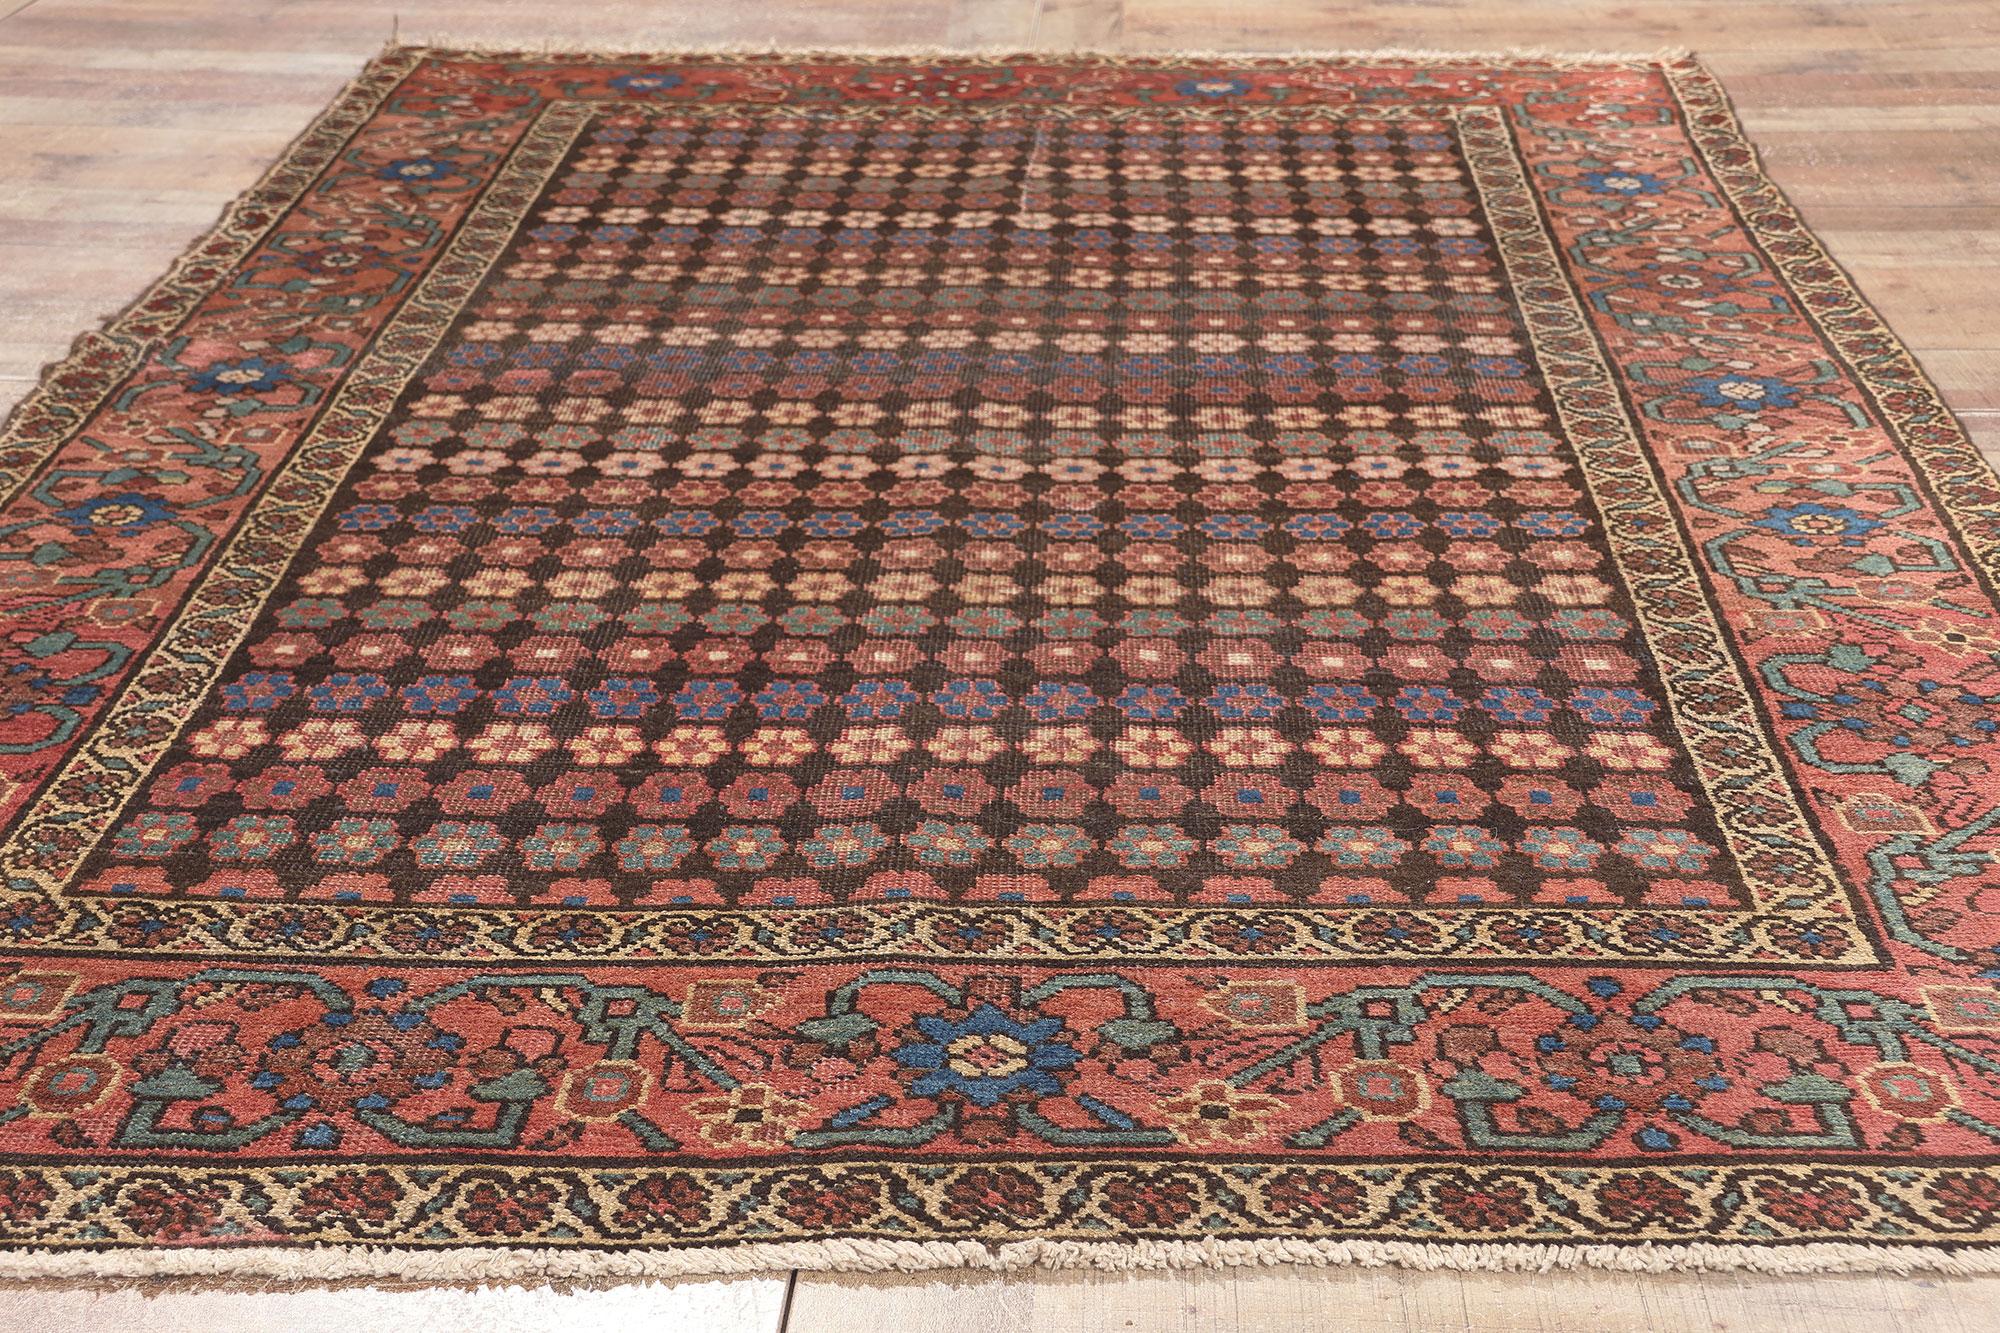 20th Century Antique Persian Hamadan Rug, Earth-Tone Elegance Meets Flower Power For Sale